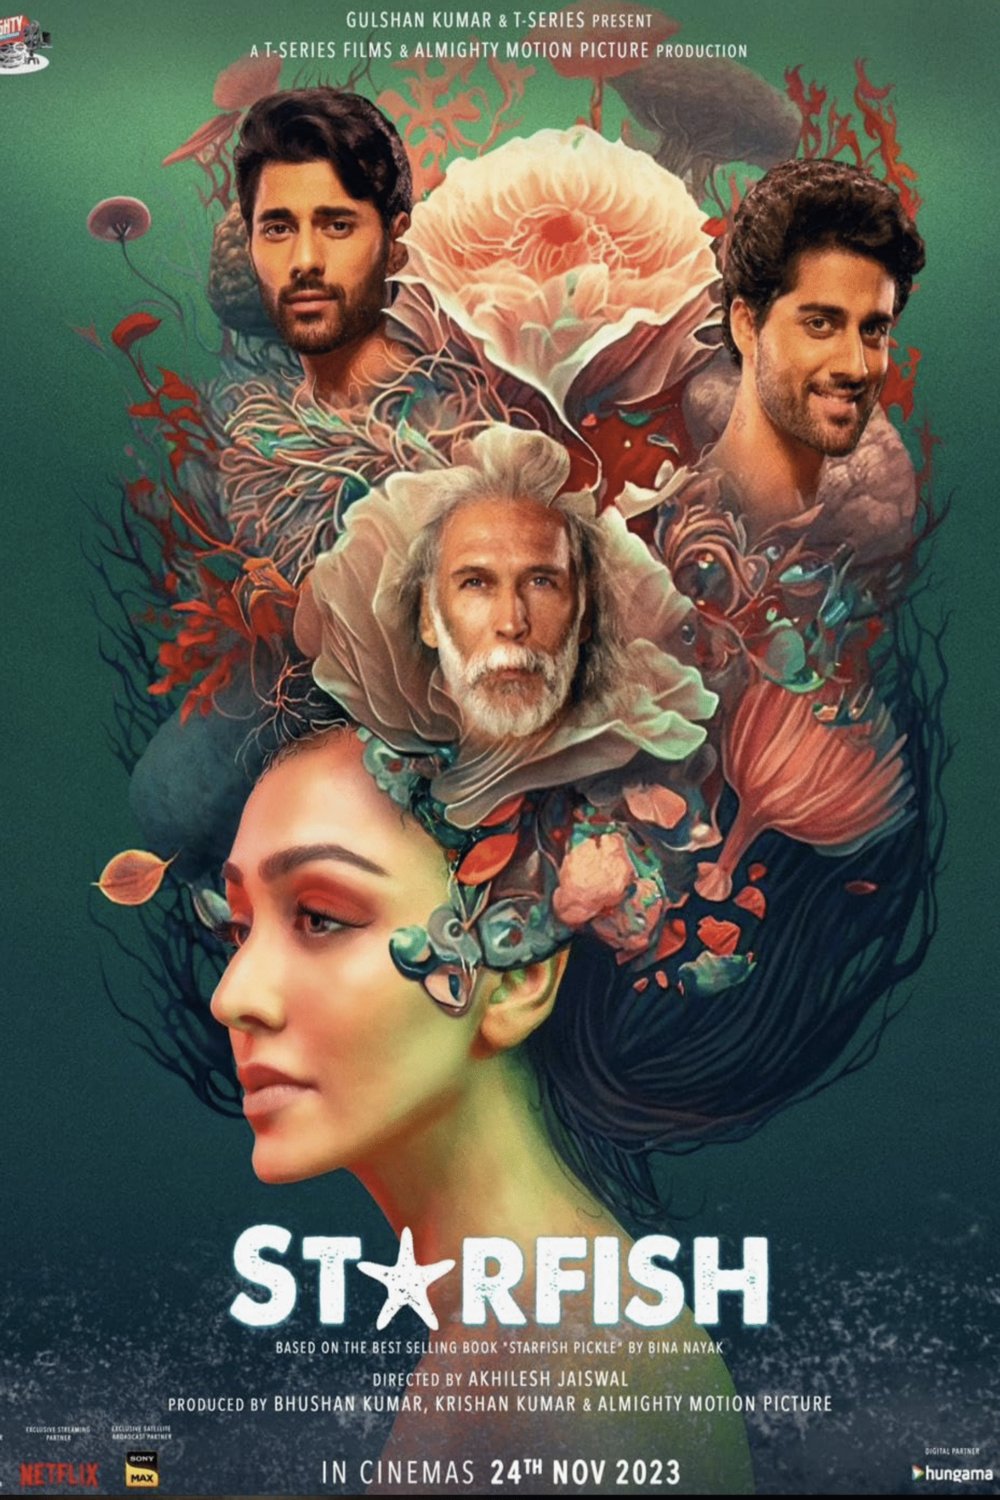 L'affiche originale du film Starfish en Hindi